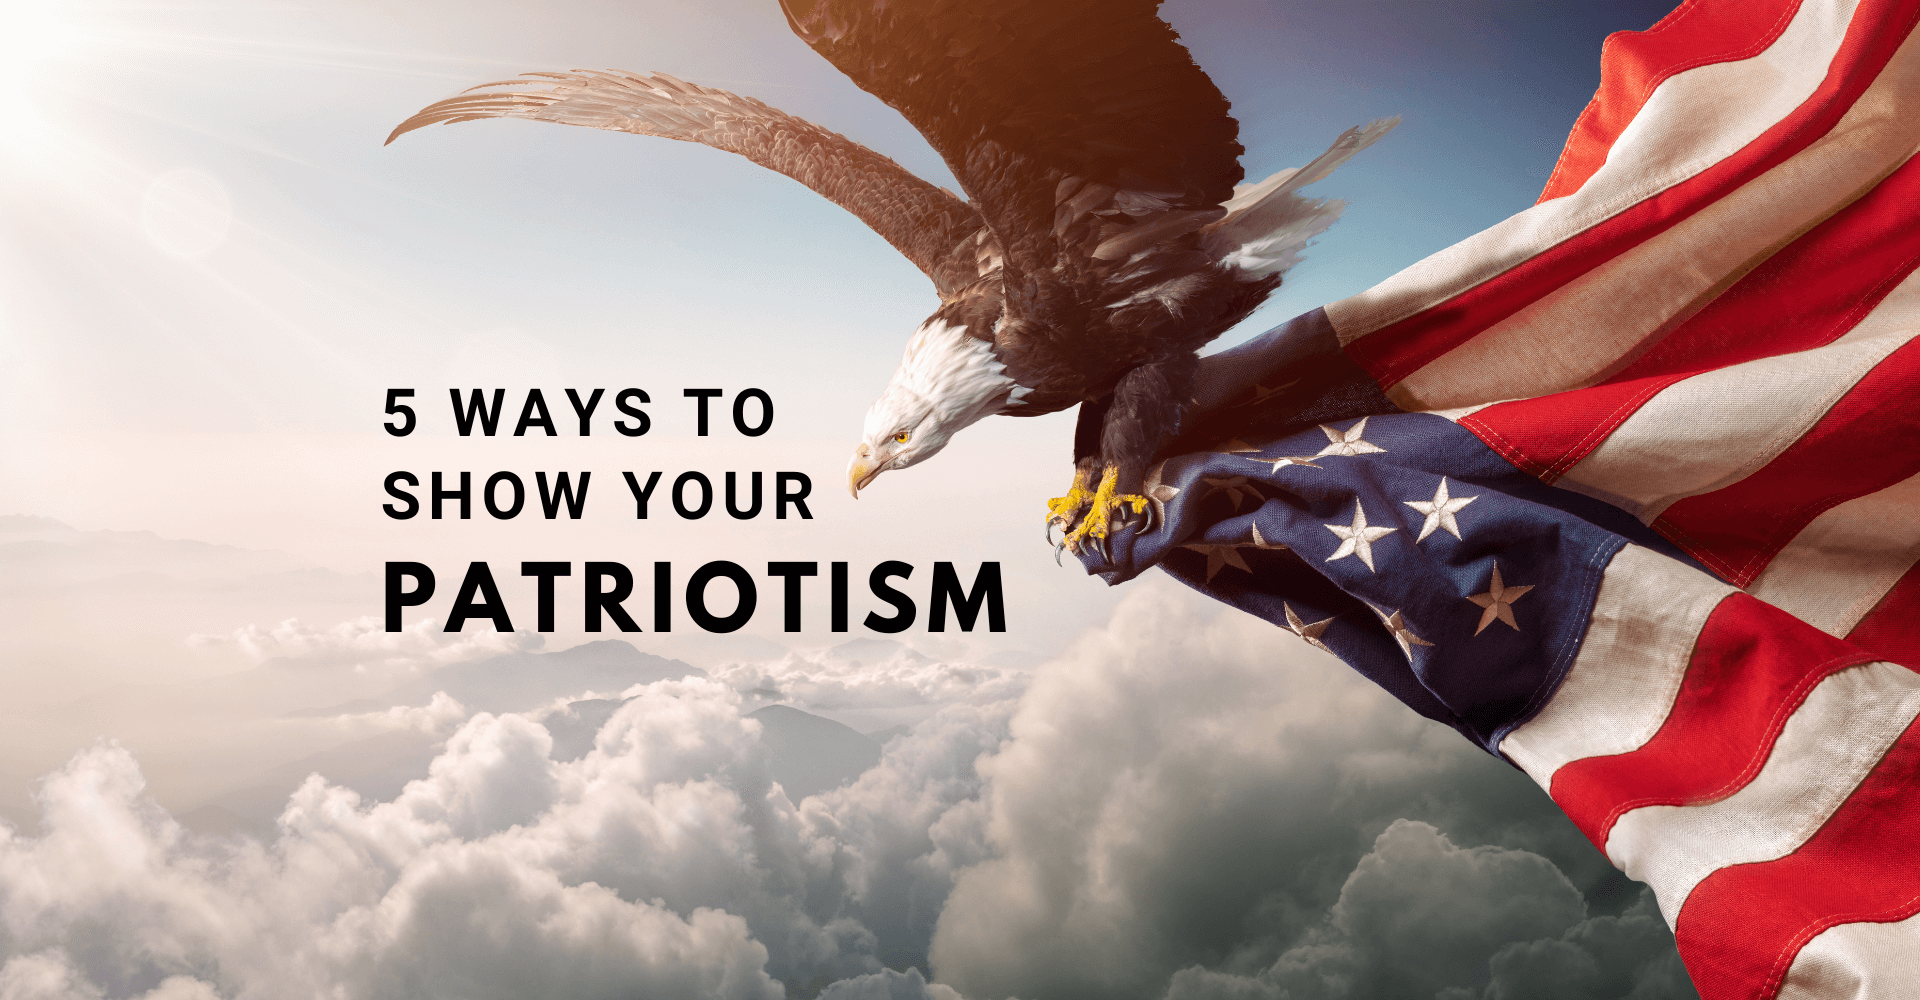 5 Ways to Show Your Patriotism